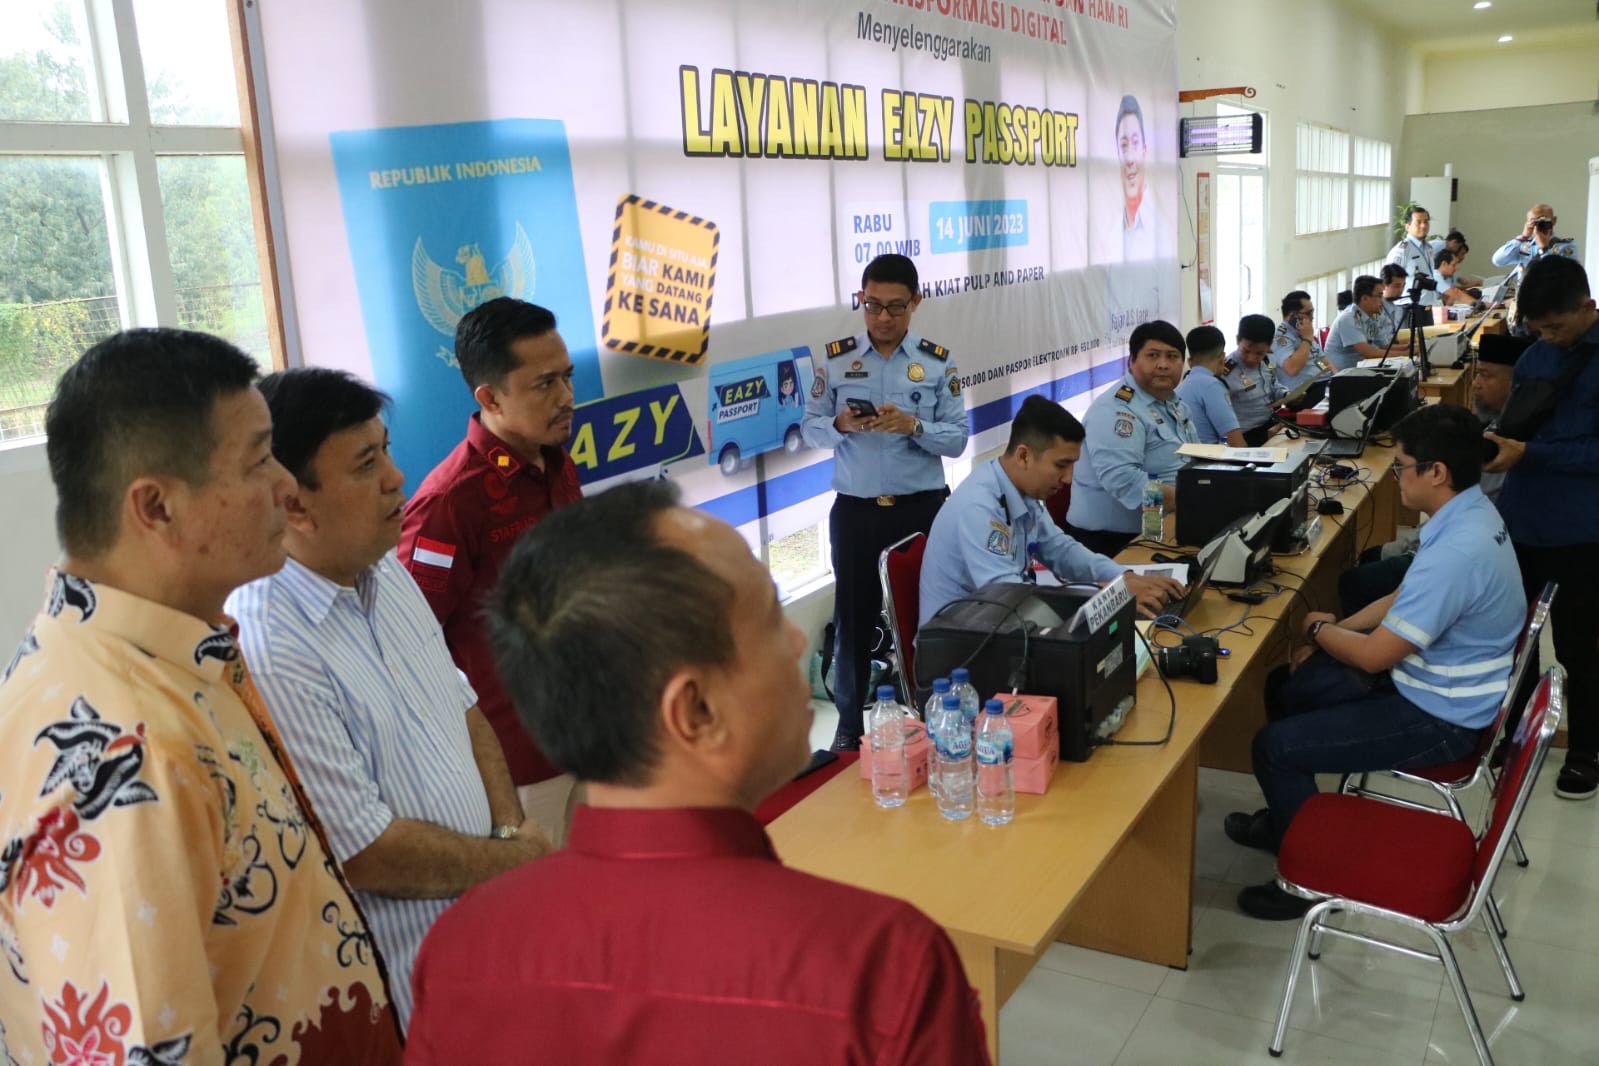 Kemenkumham Riau Berikan Layanan Eazy Pasport 